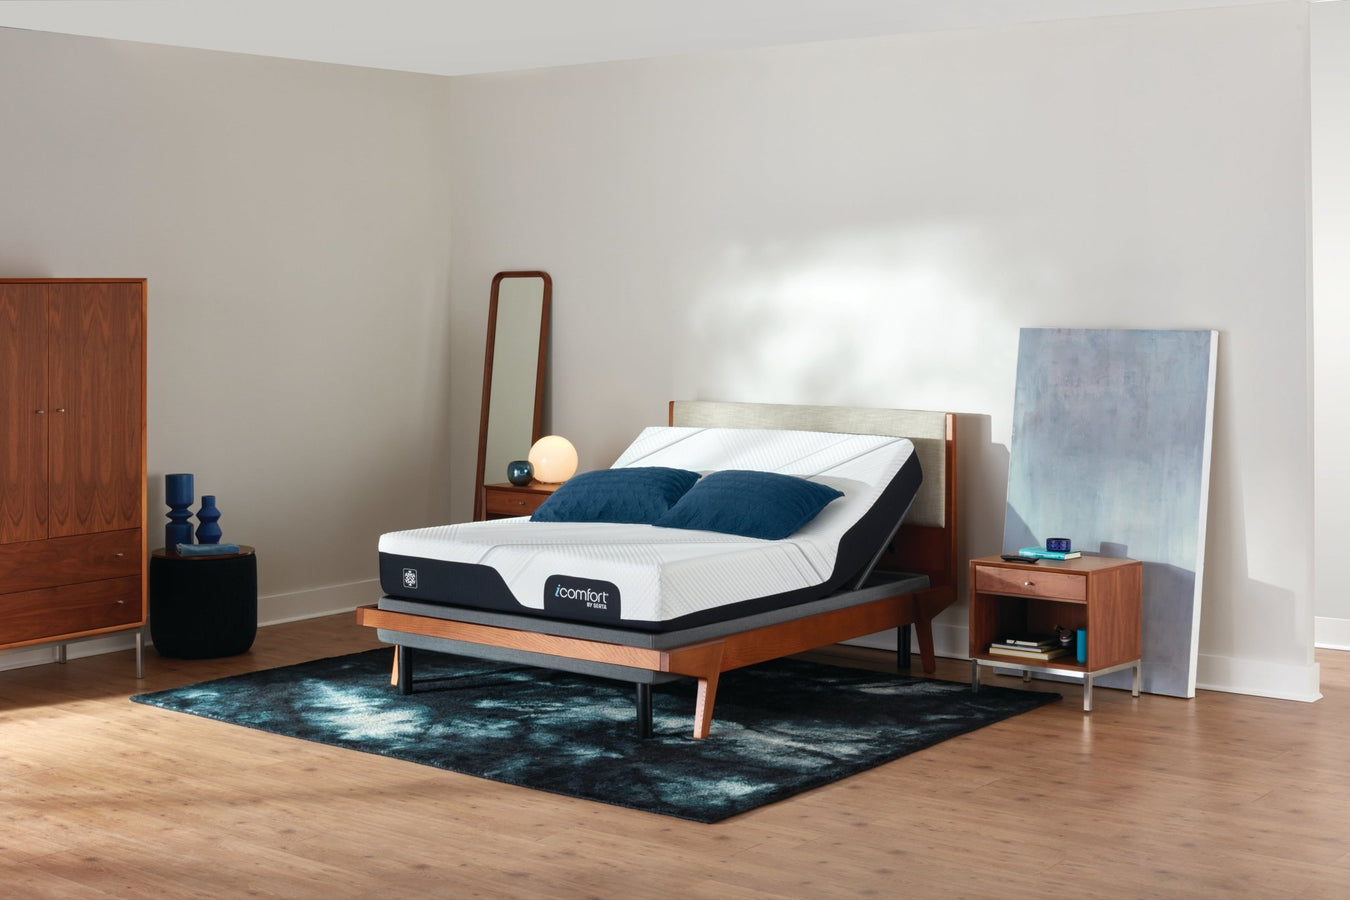 Bed Frames & Foundation | Mattress Mars Millenia Crossing (Next to IKEA)